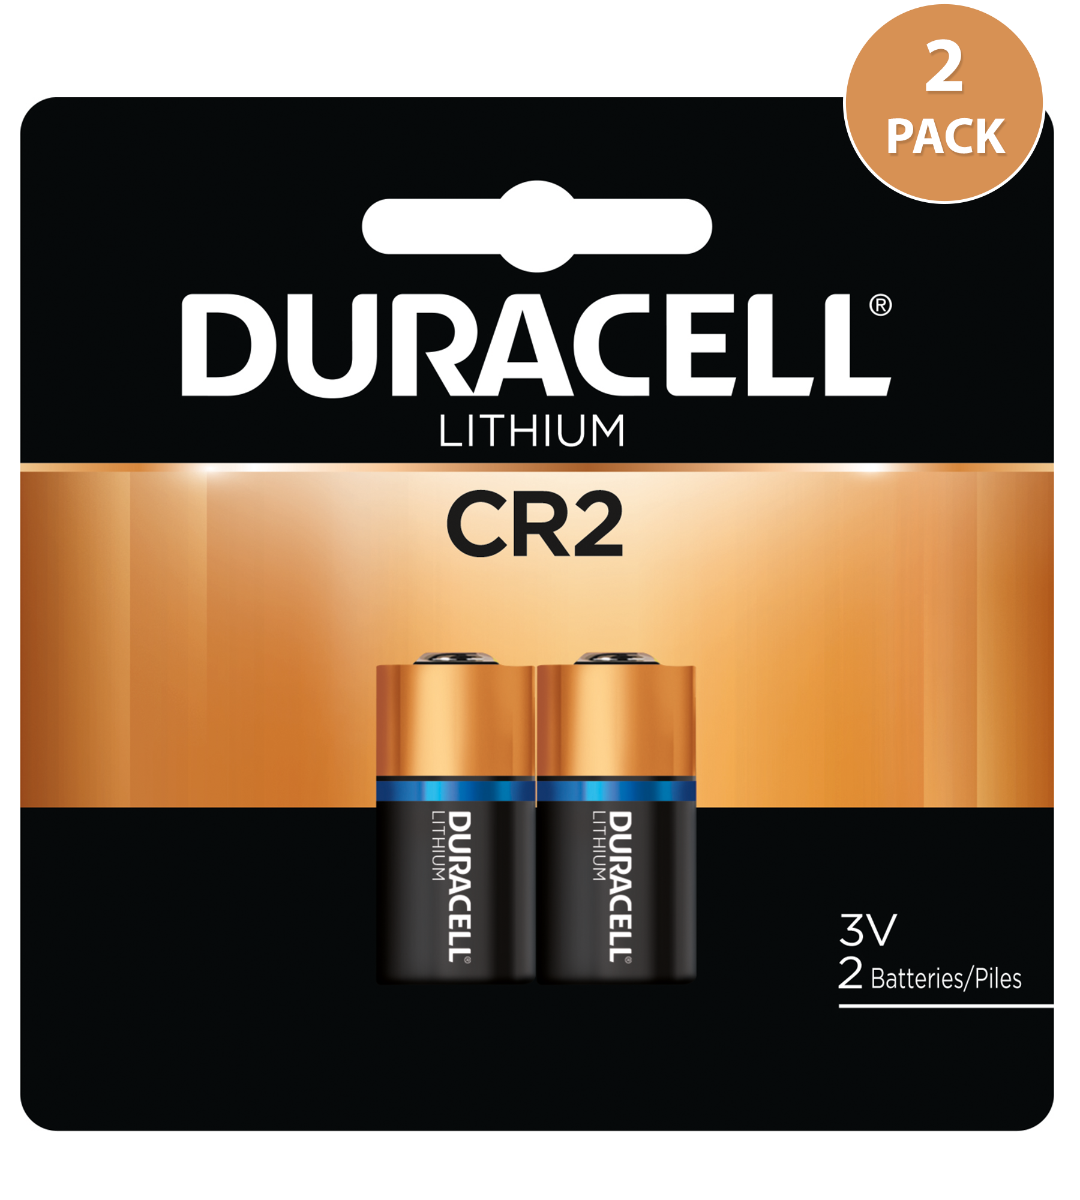 Disarmament Mathis gone crazy Duracell CR2 Battery Ultra Lithium 3V Photo Size, DLCR2B2PK (2 Batteries)